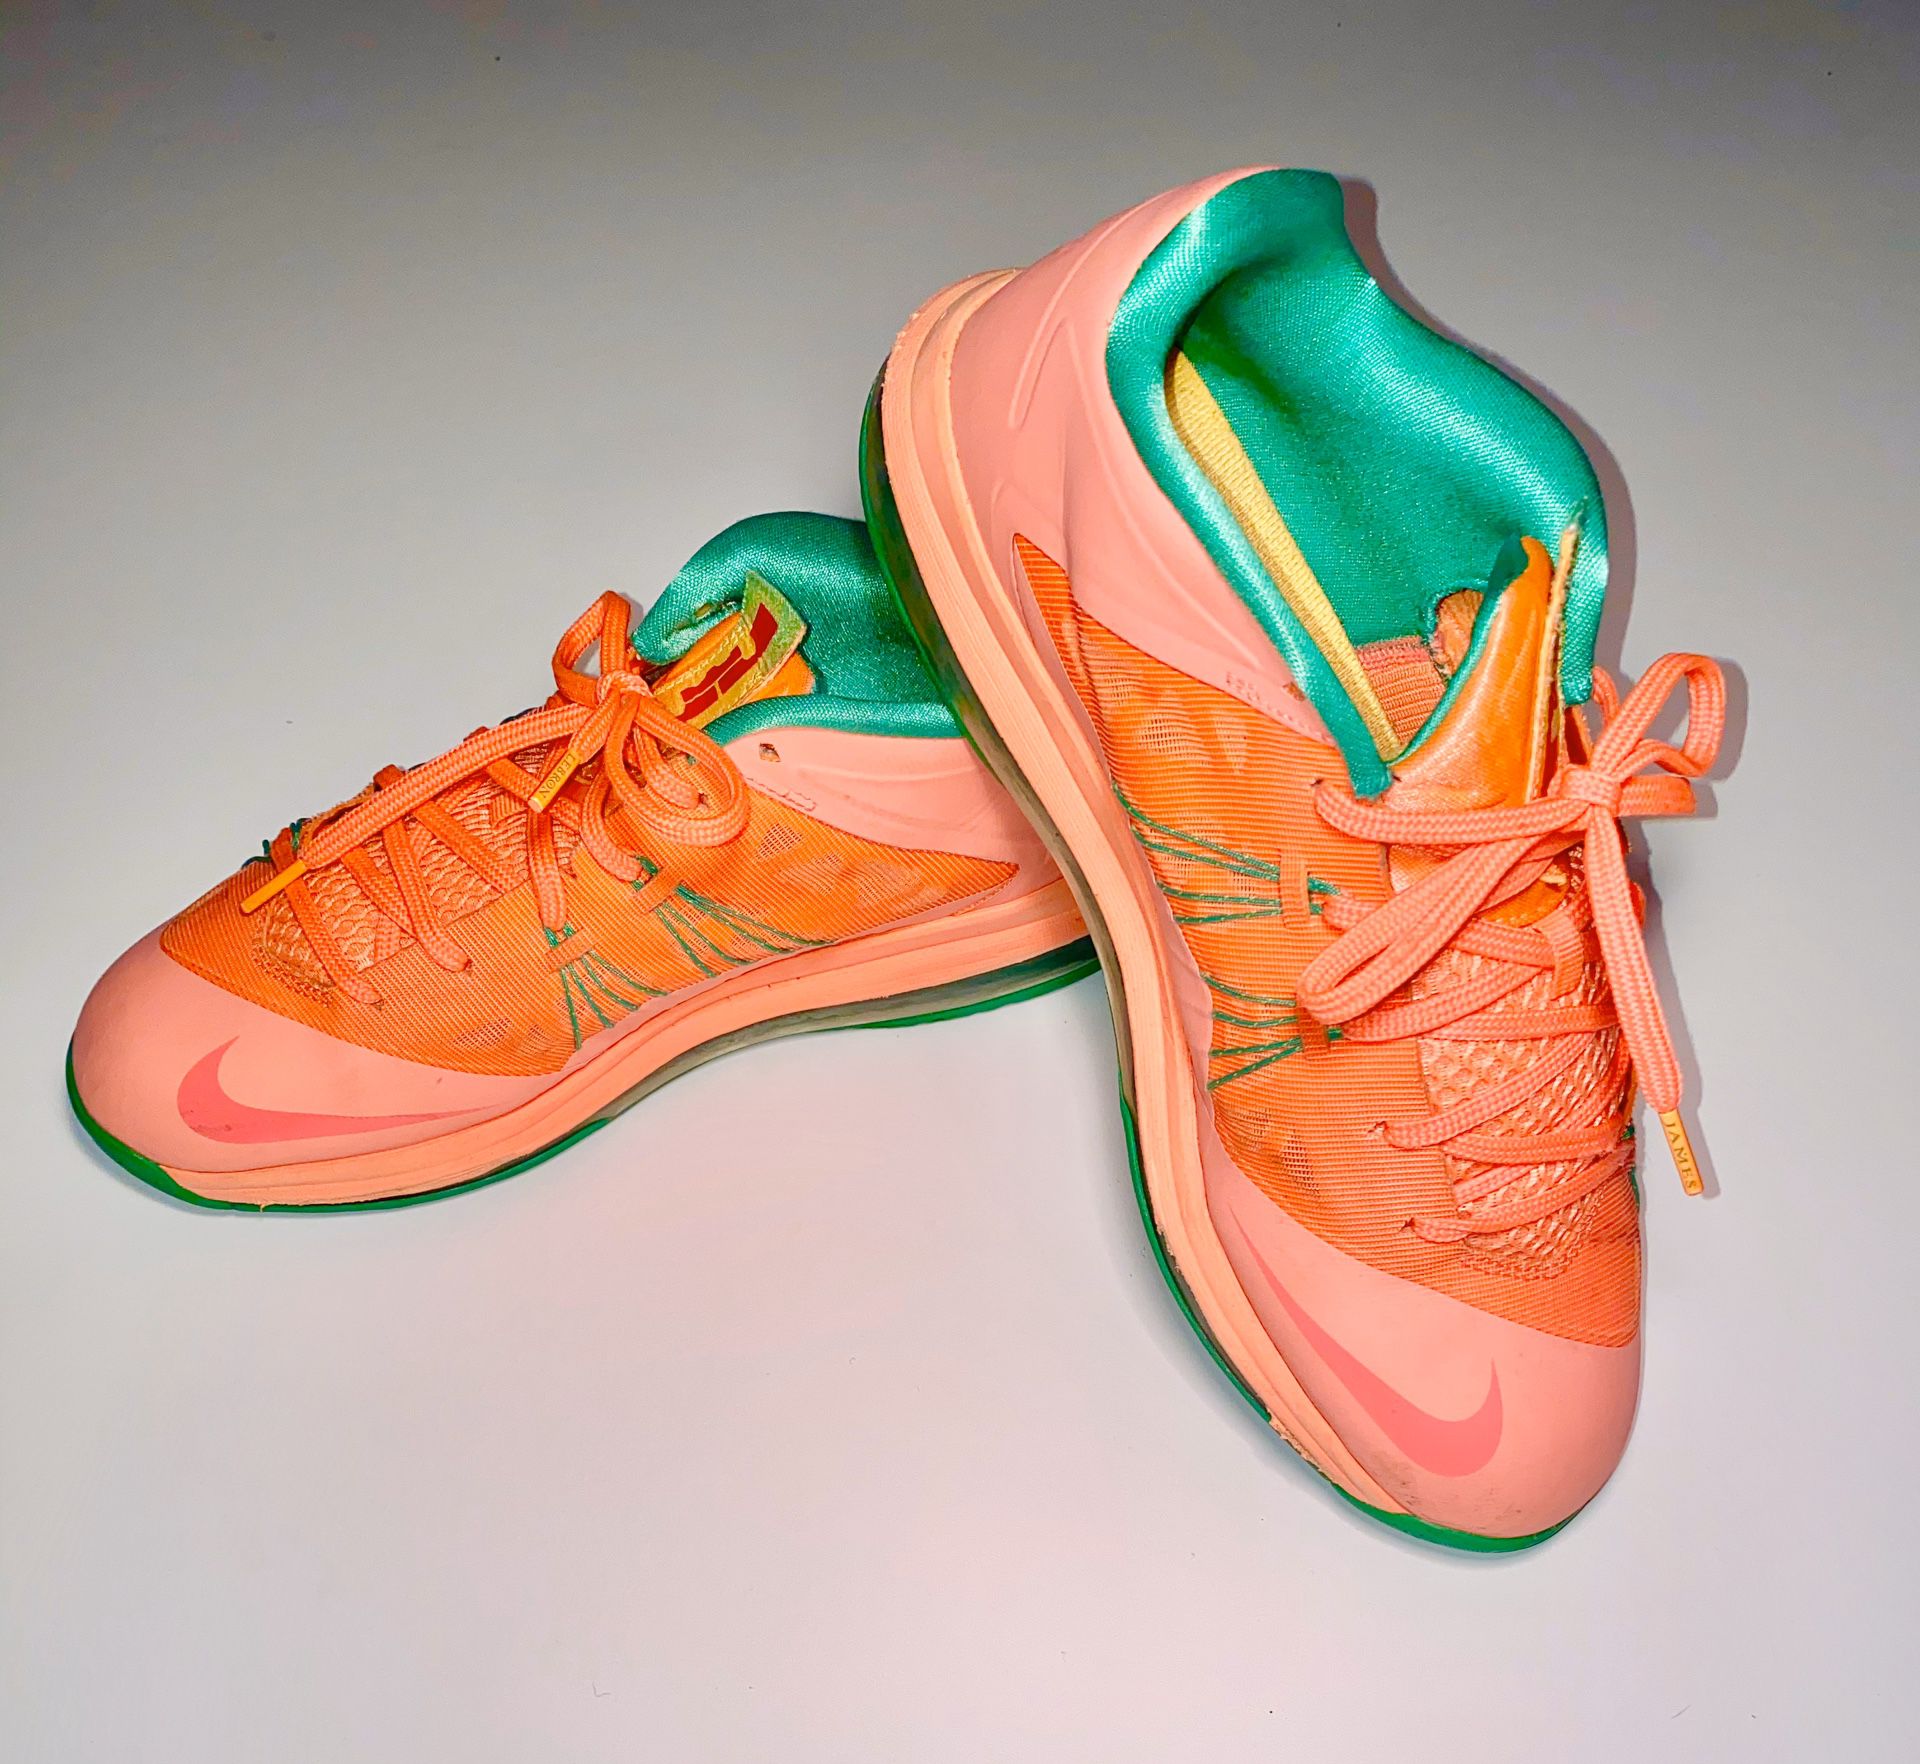 LeBron watermelon shoes